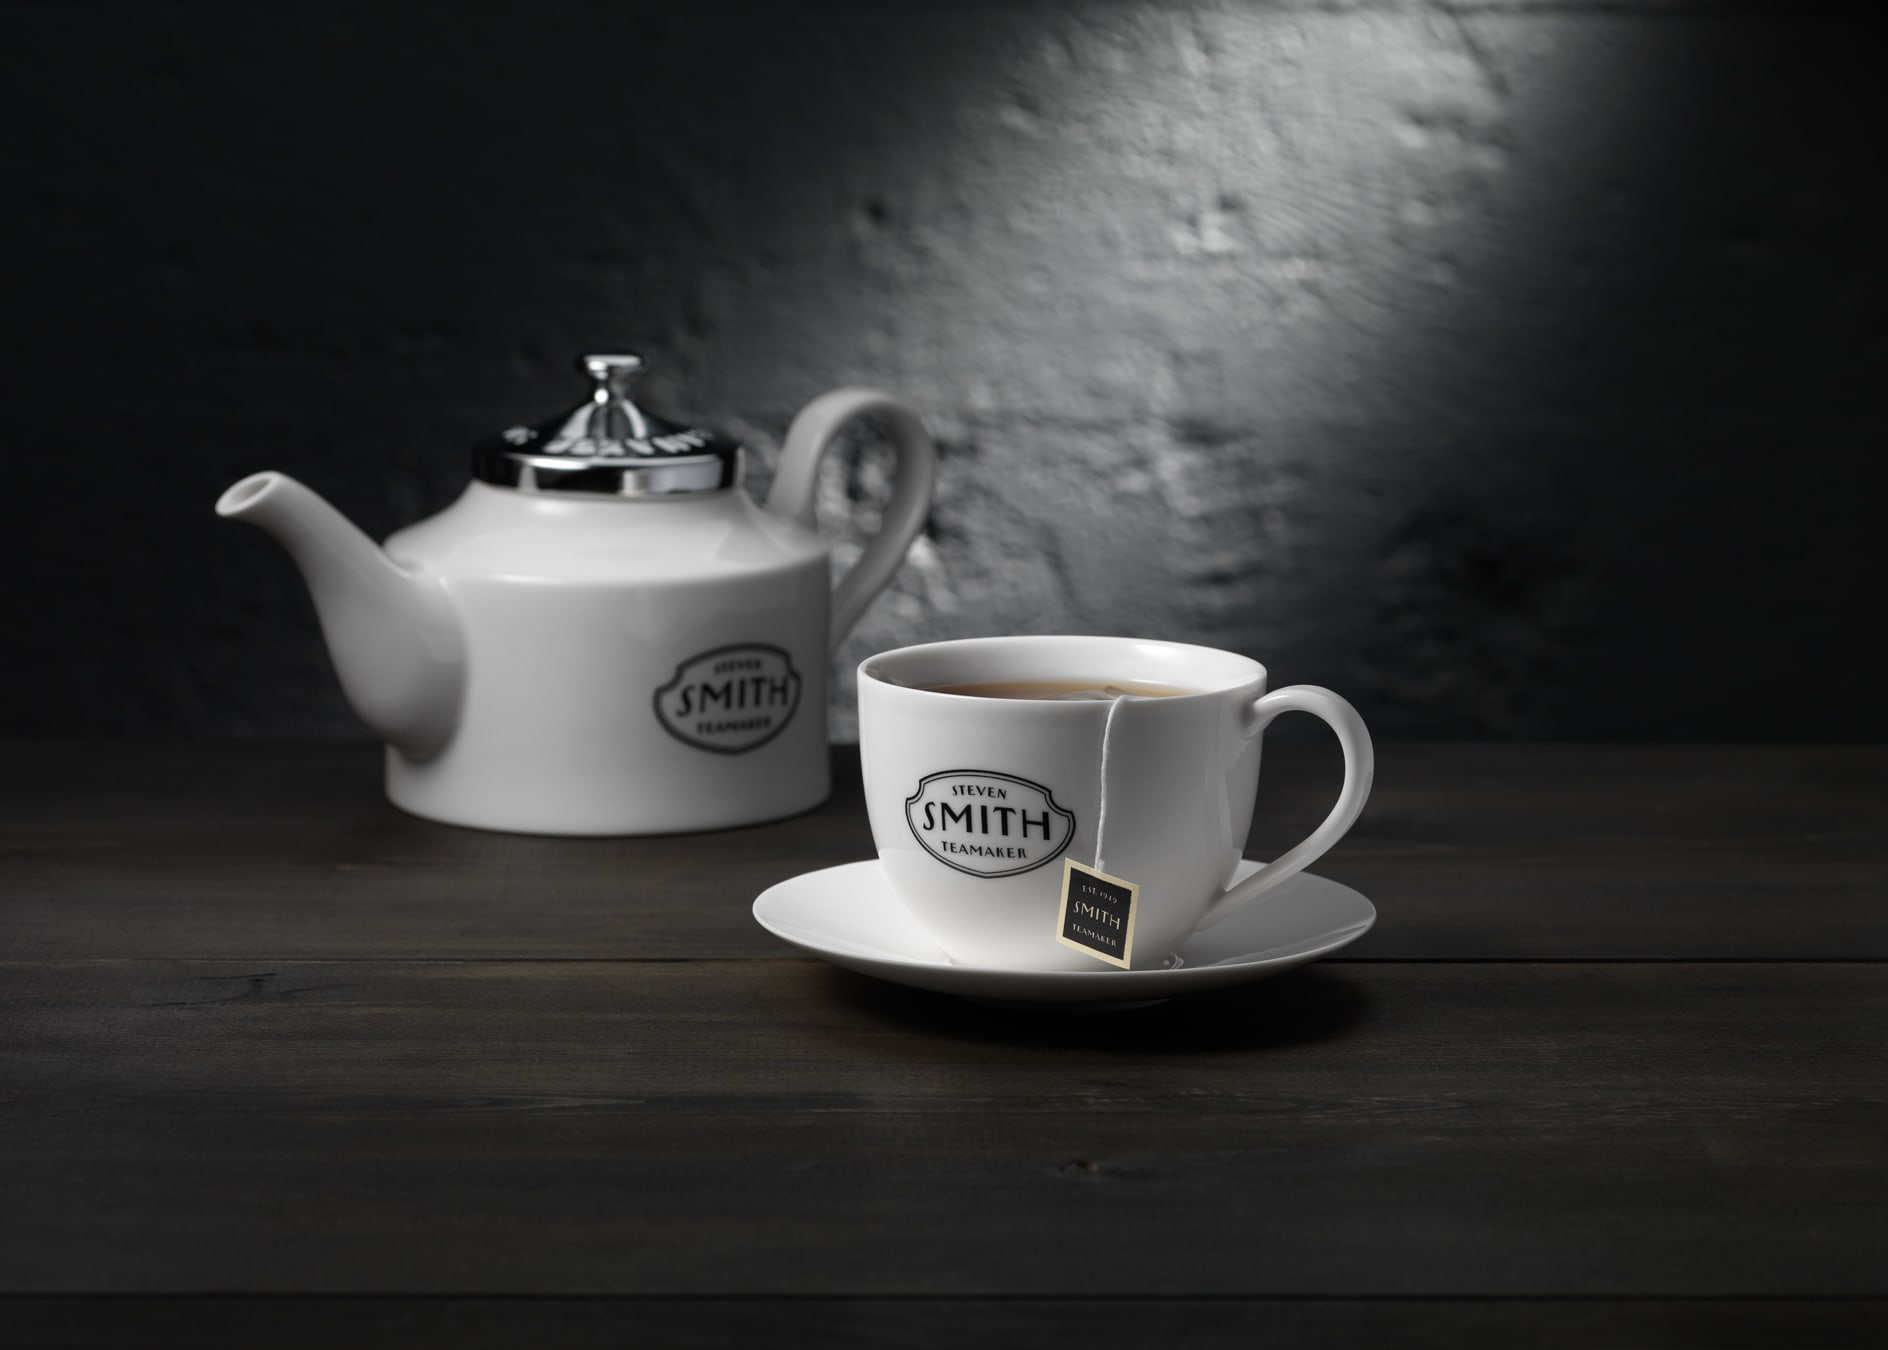 Steven Smith Teamaker identity design teapot teacup